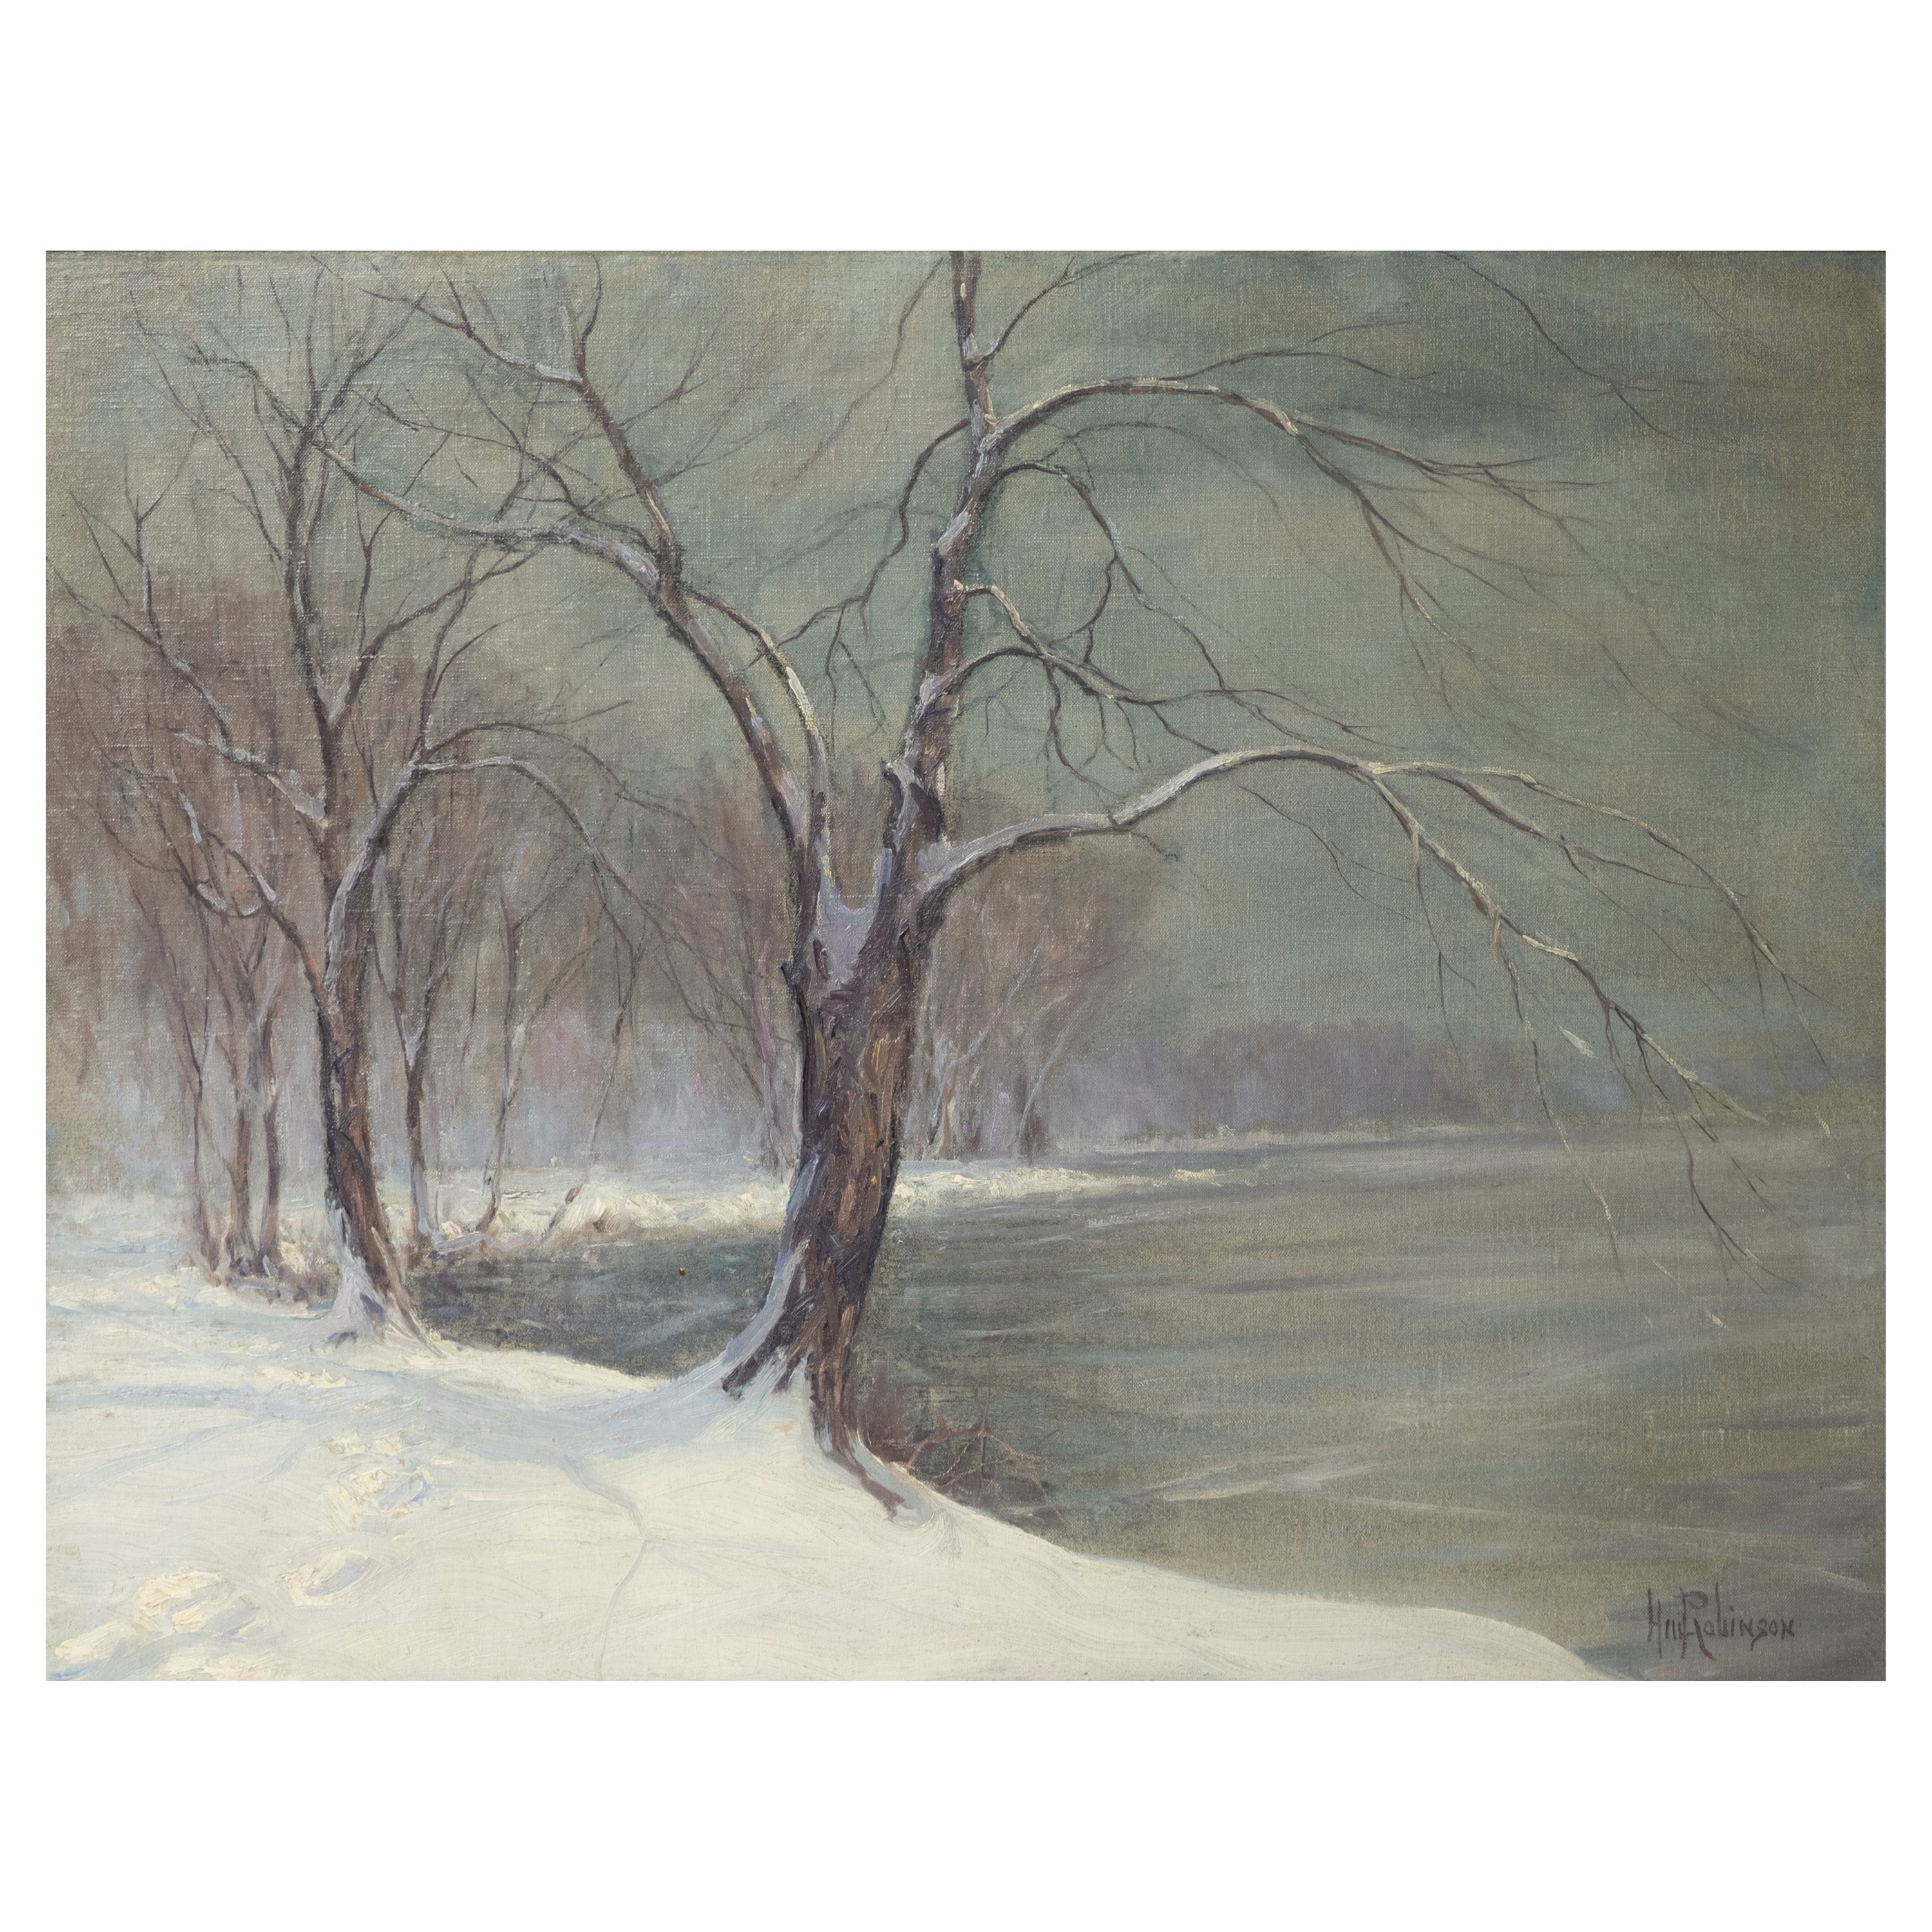 Hal Robinson 'Winter Landscape', Oil on Canvas For Sale